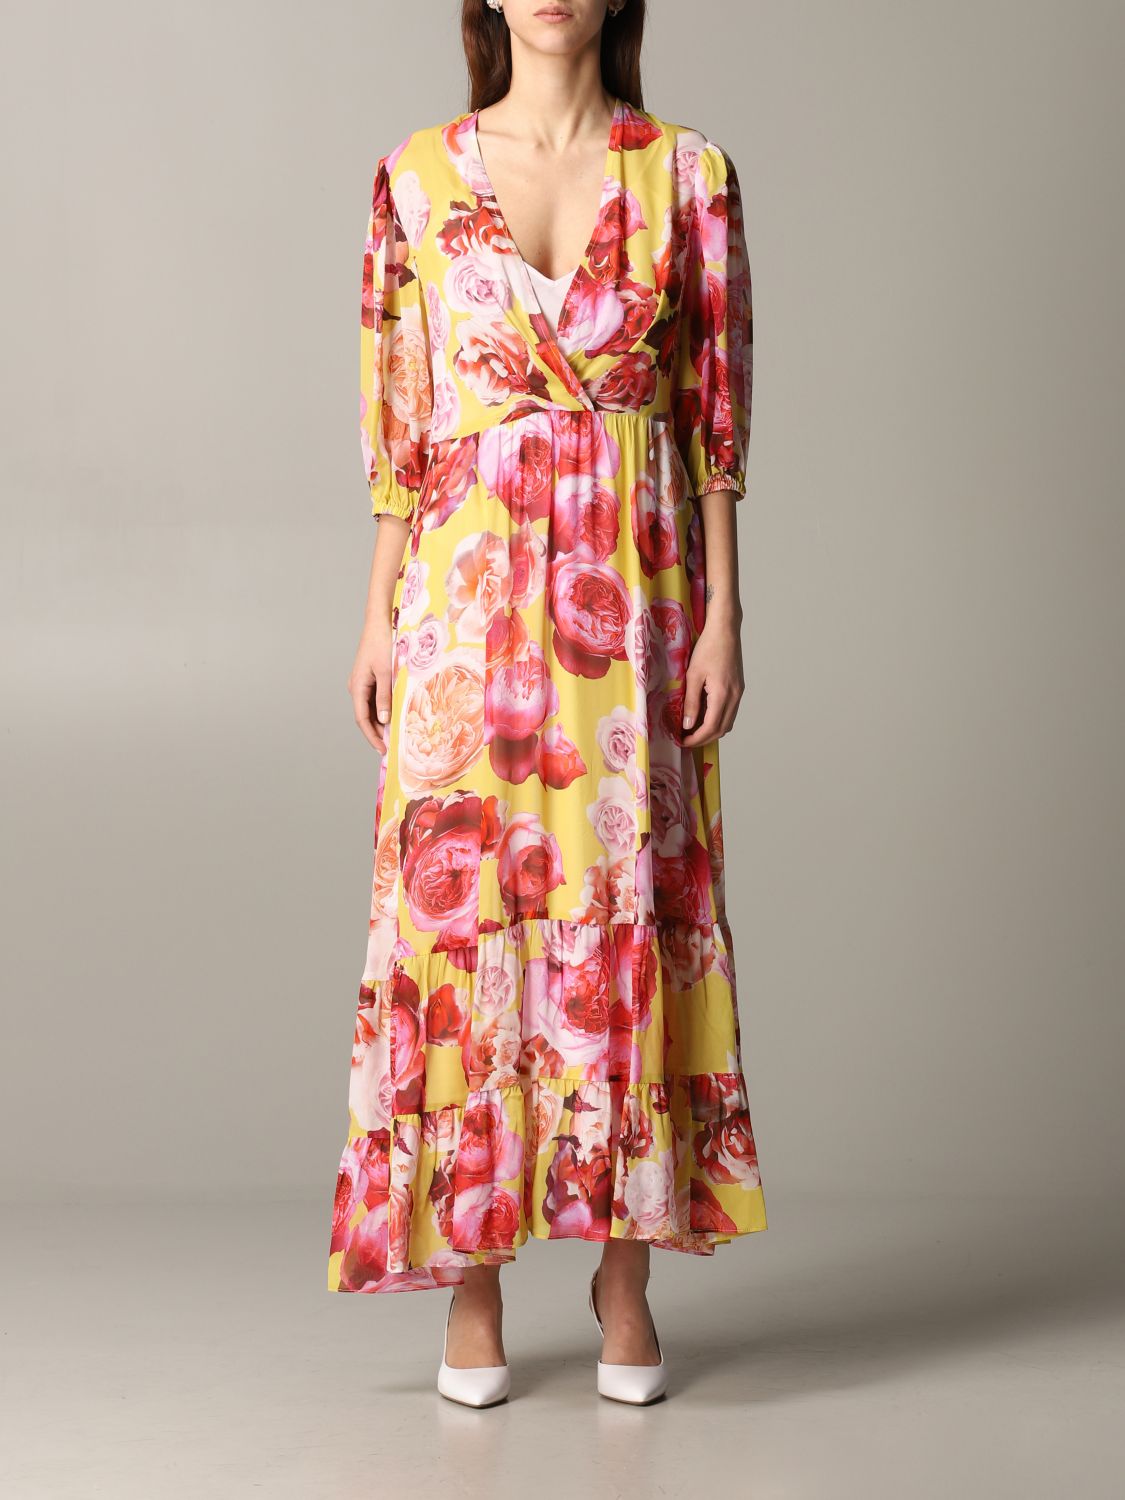 pinko floral dress